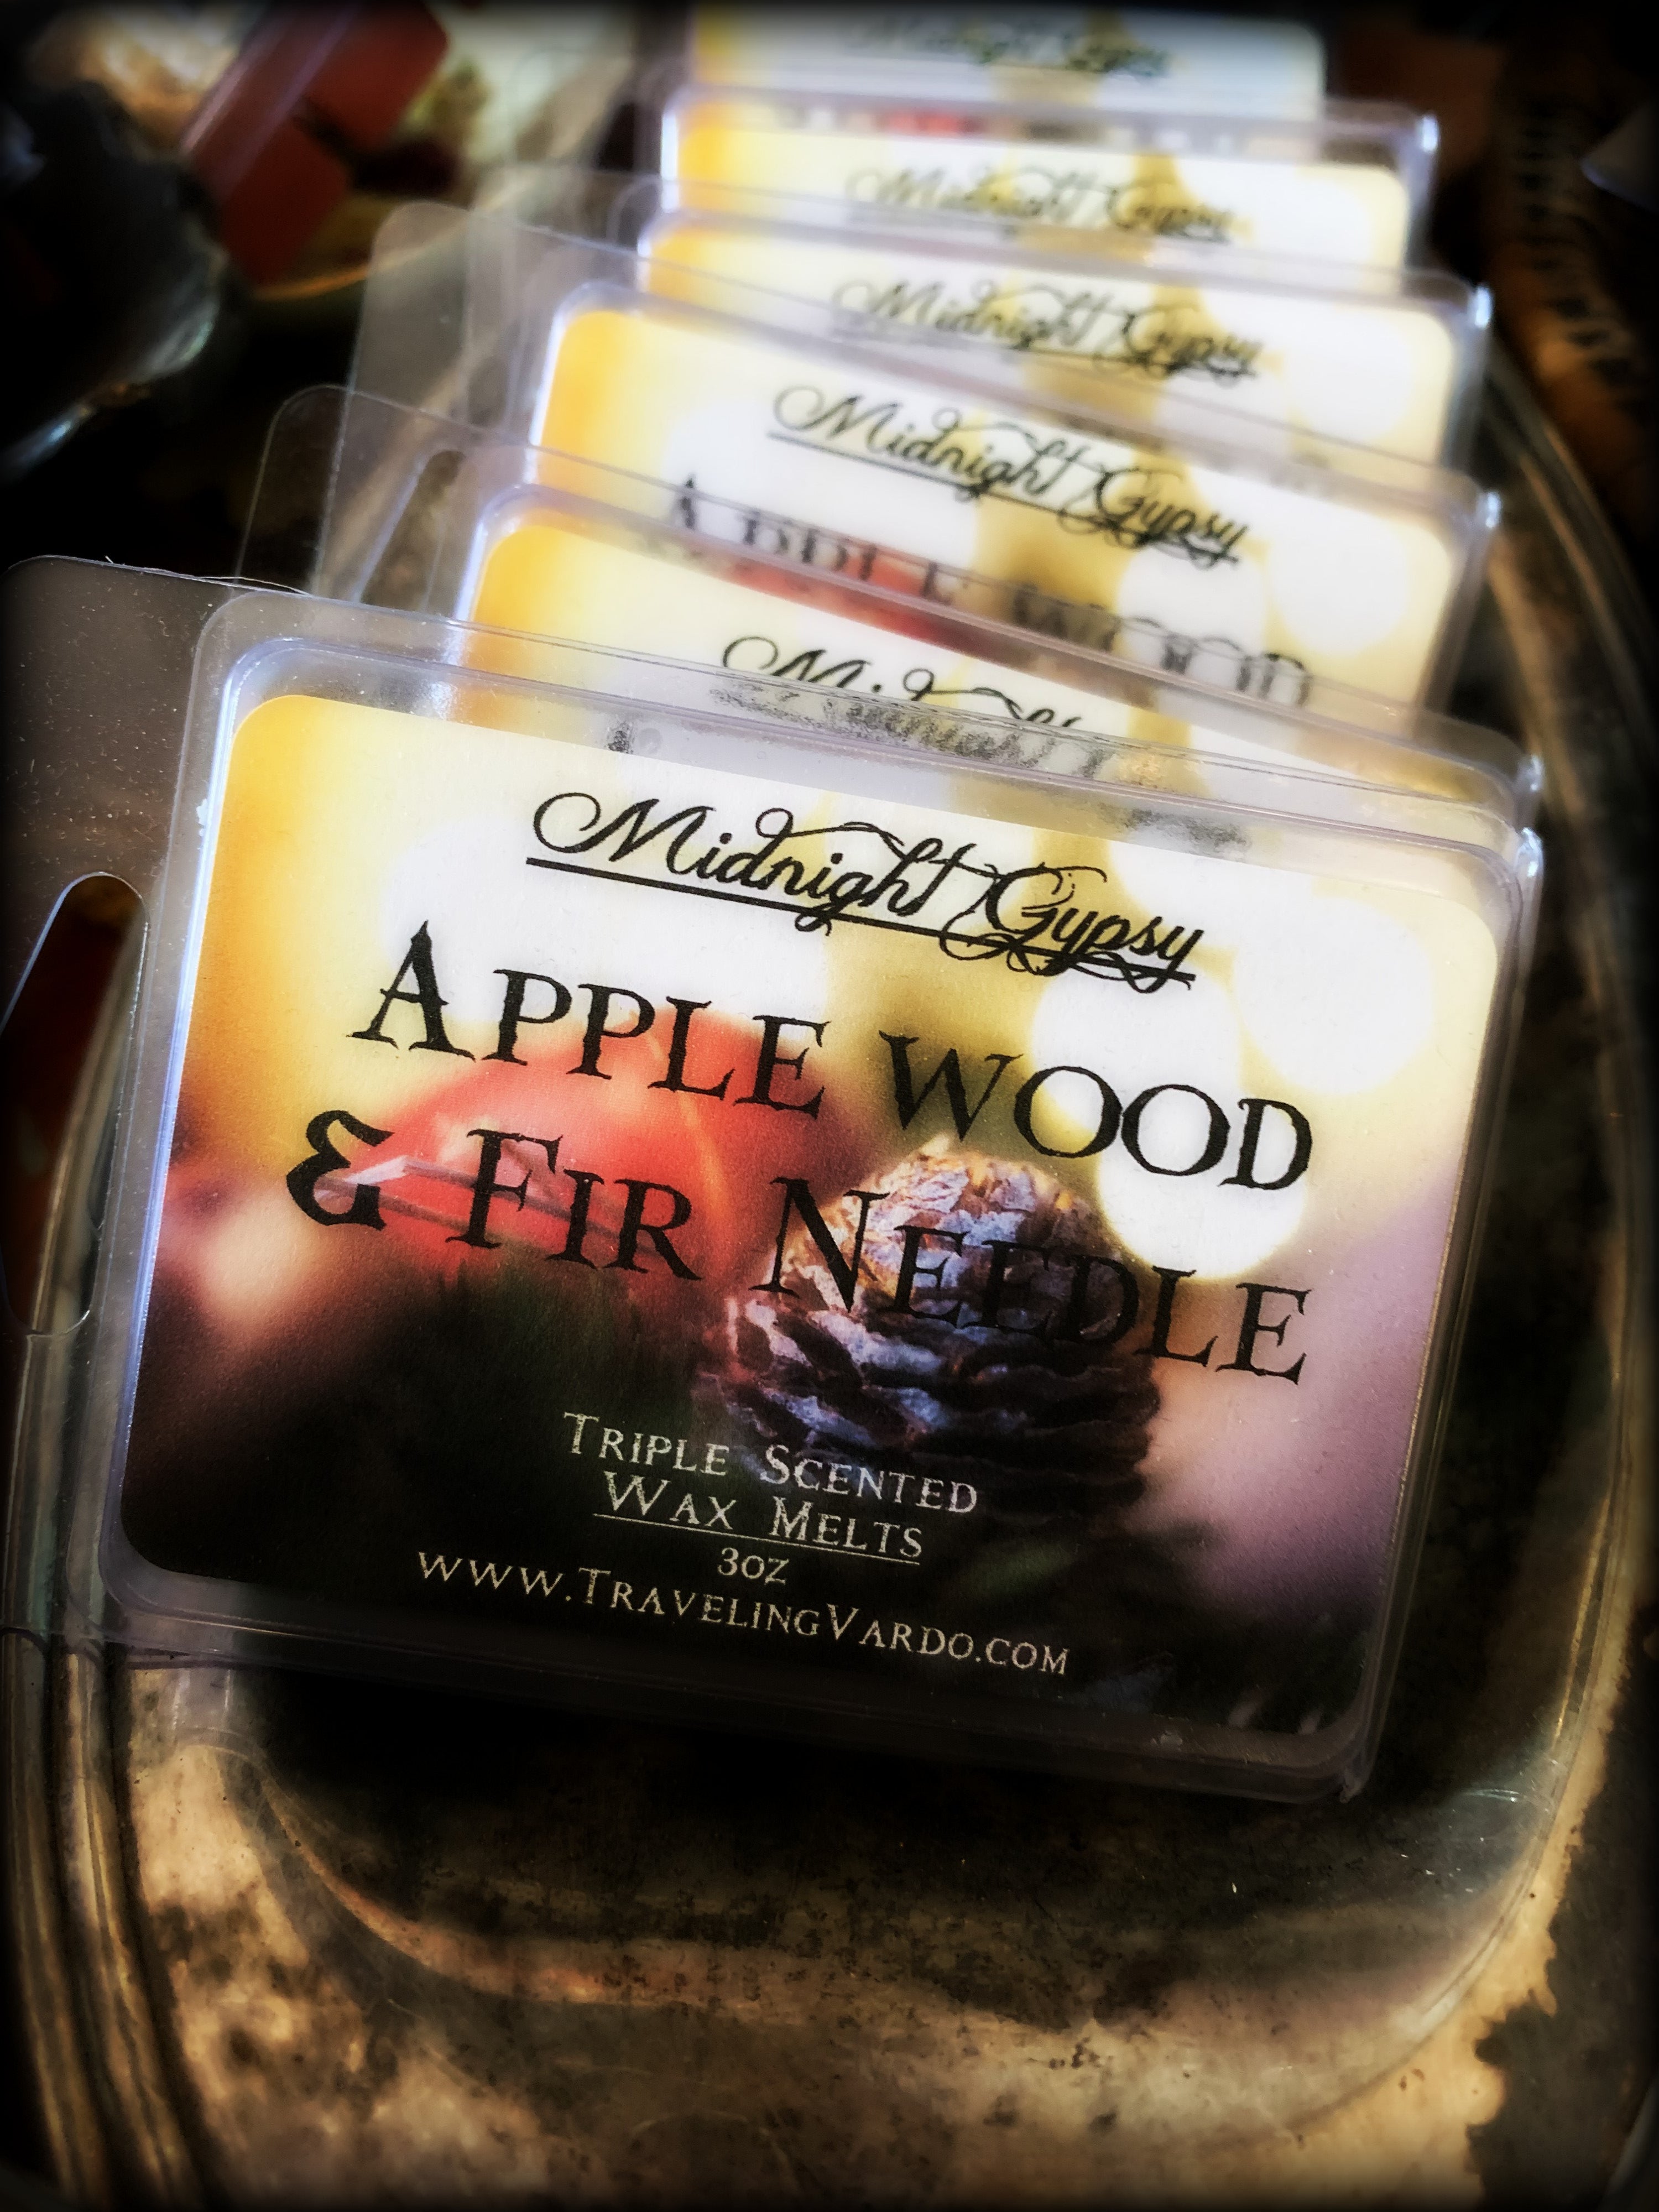 APPLE WOOD & FIR NEEDLE ~ Highly Fragranced Soy Blend Wax Tarts